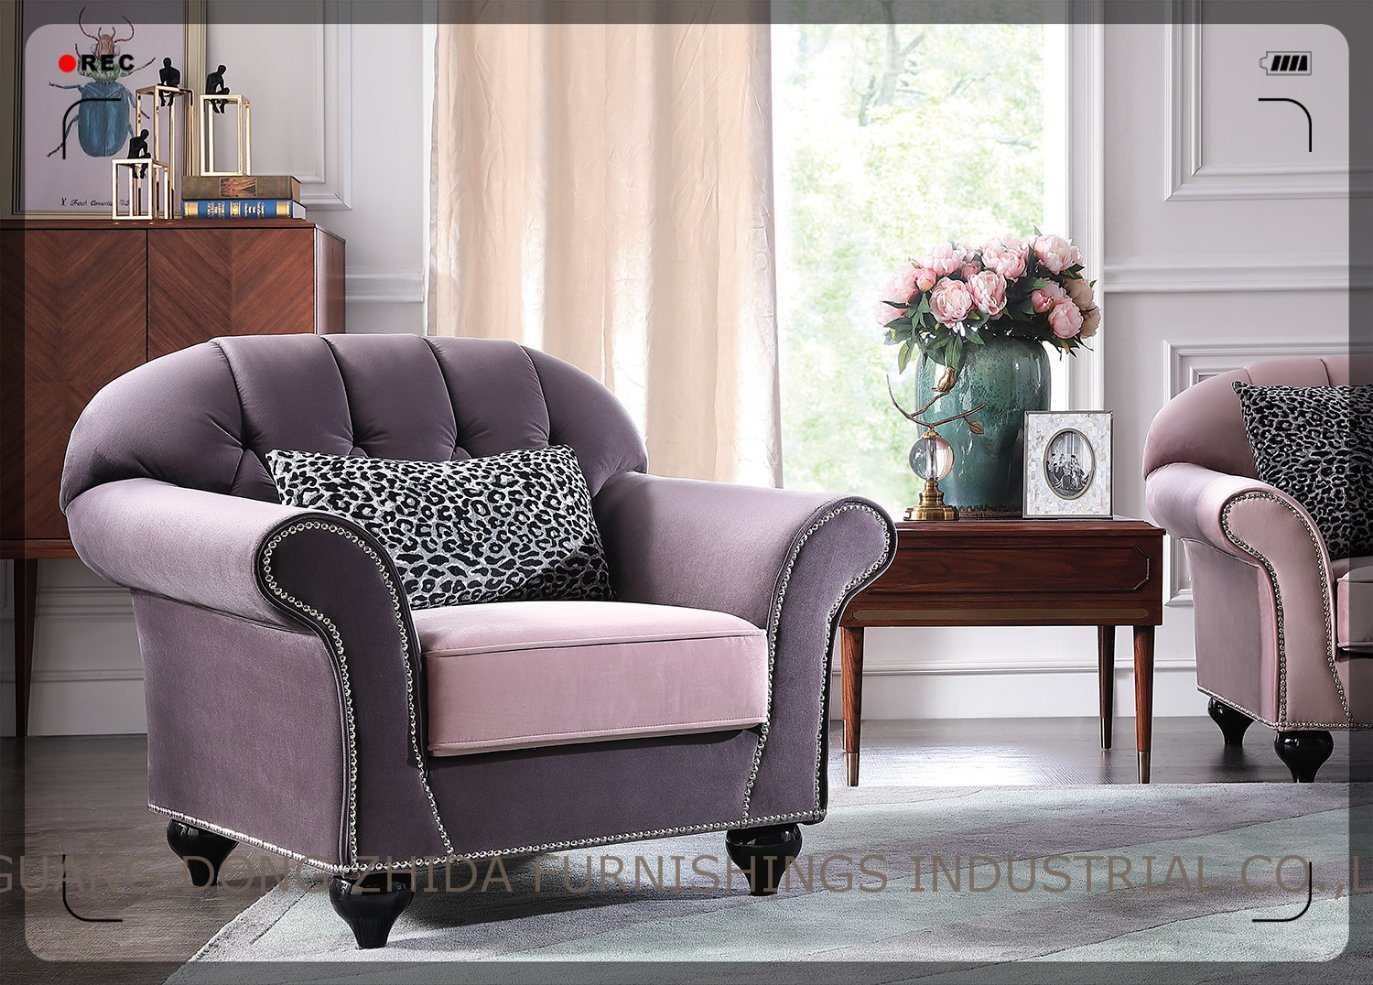 Cheap Fabric Sofa Set Promotion Item